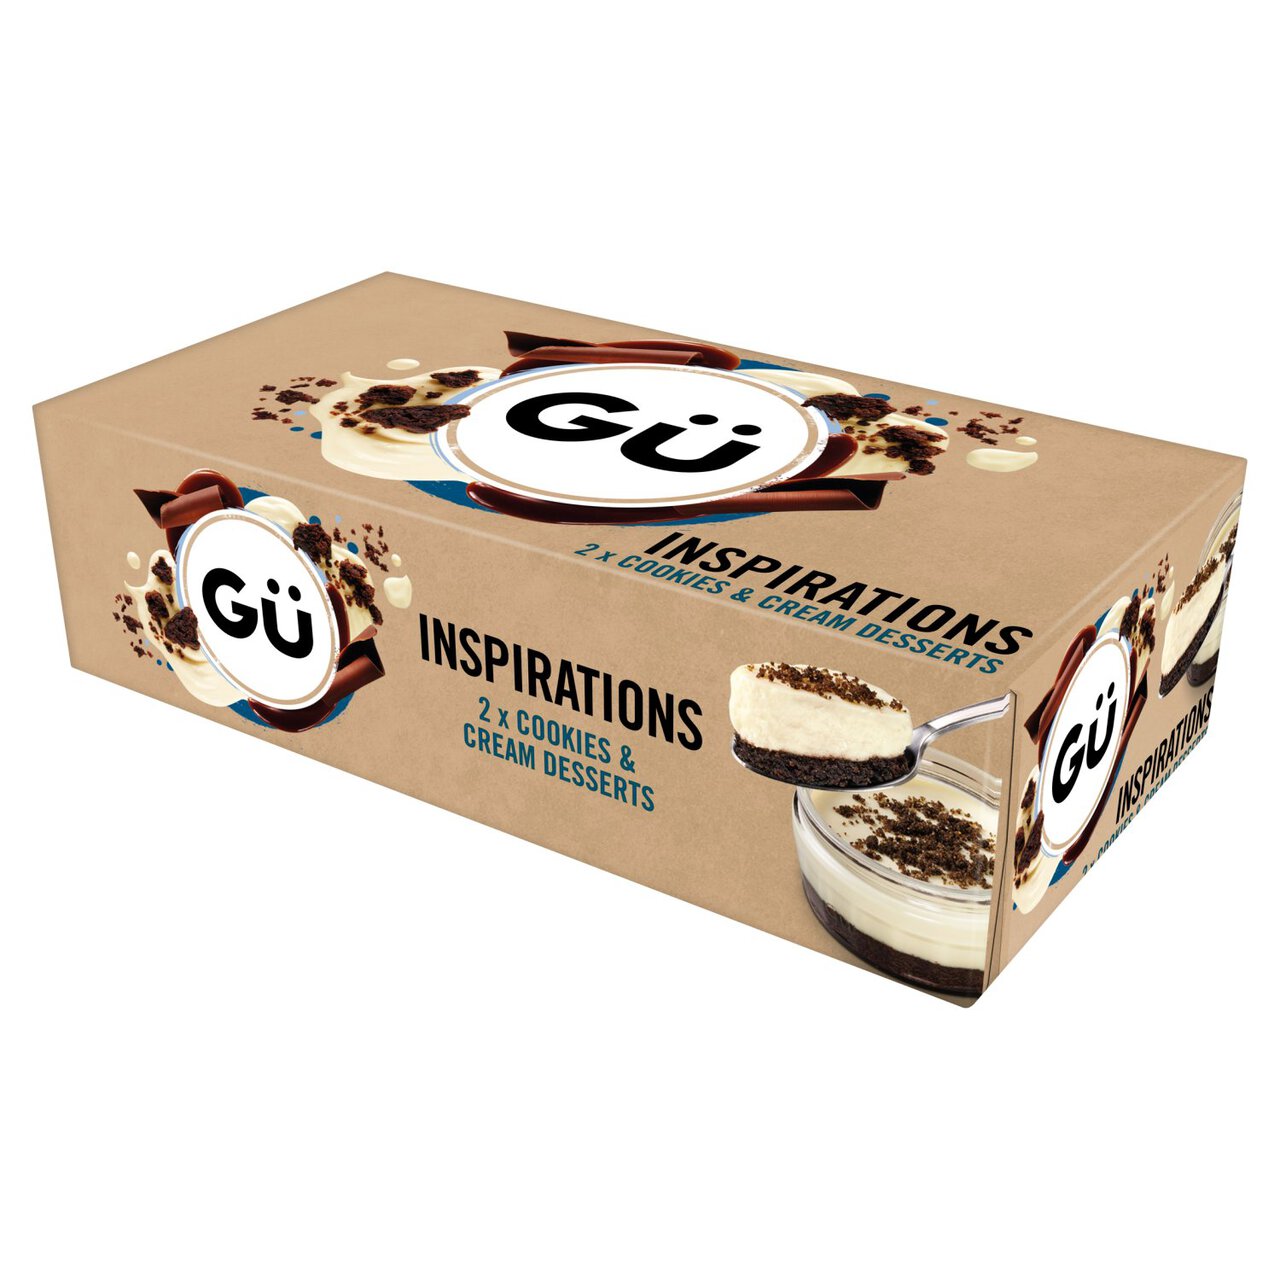 Gu Inspirations Cookies & Cream Desserts 2 x 85g